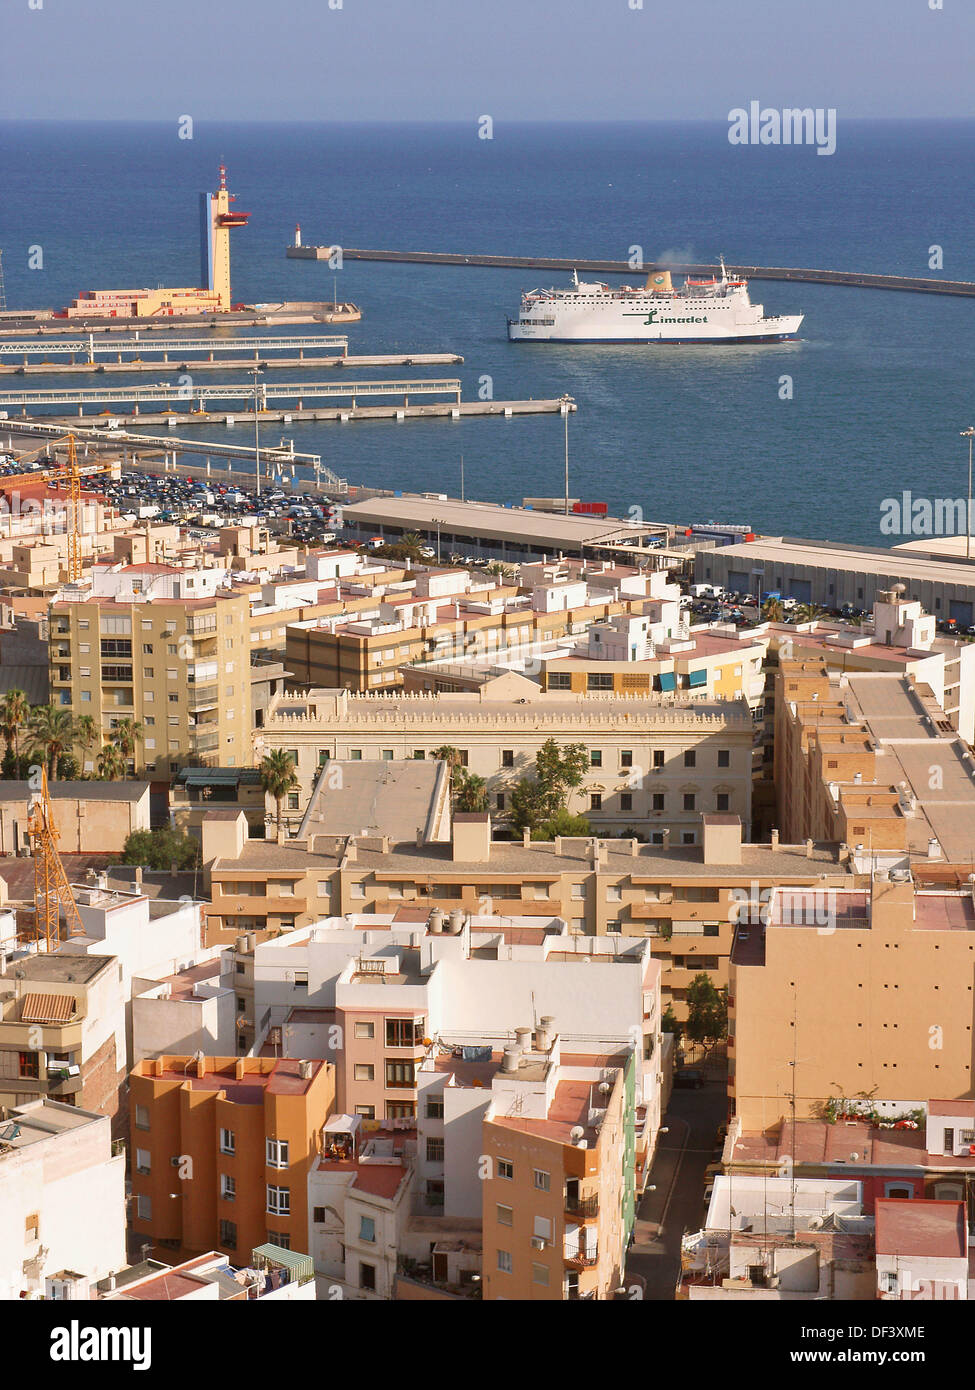 Almeria port. Spain Stock Photo - Alamy